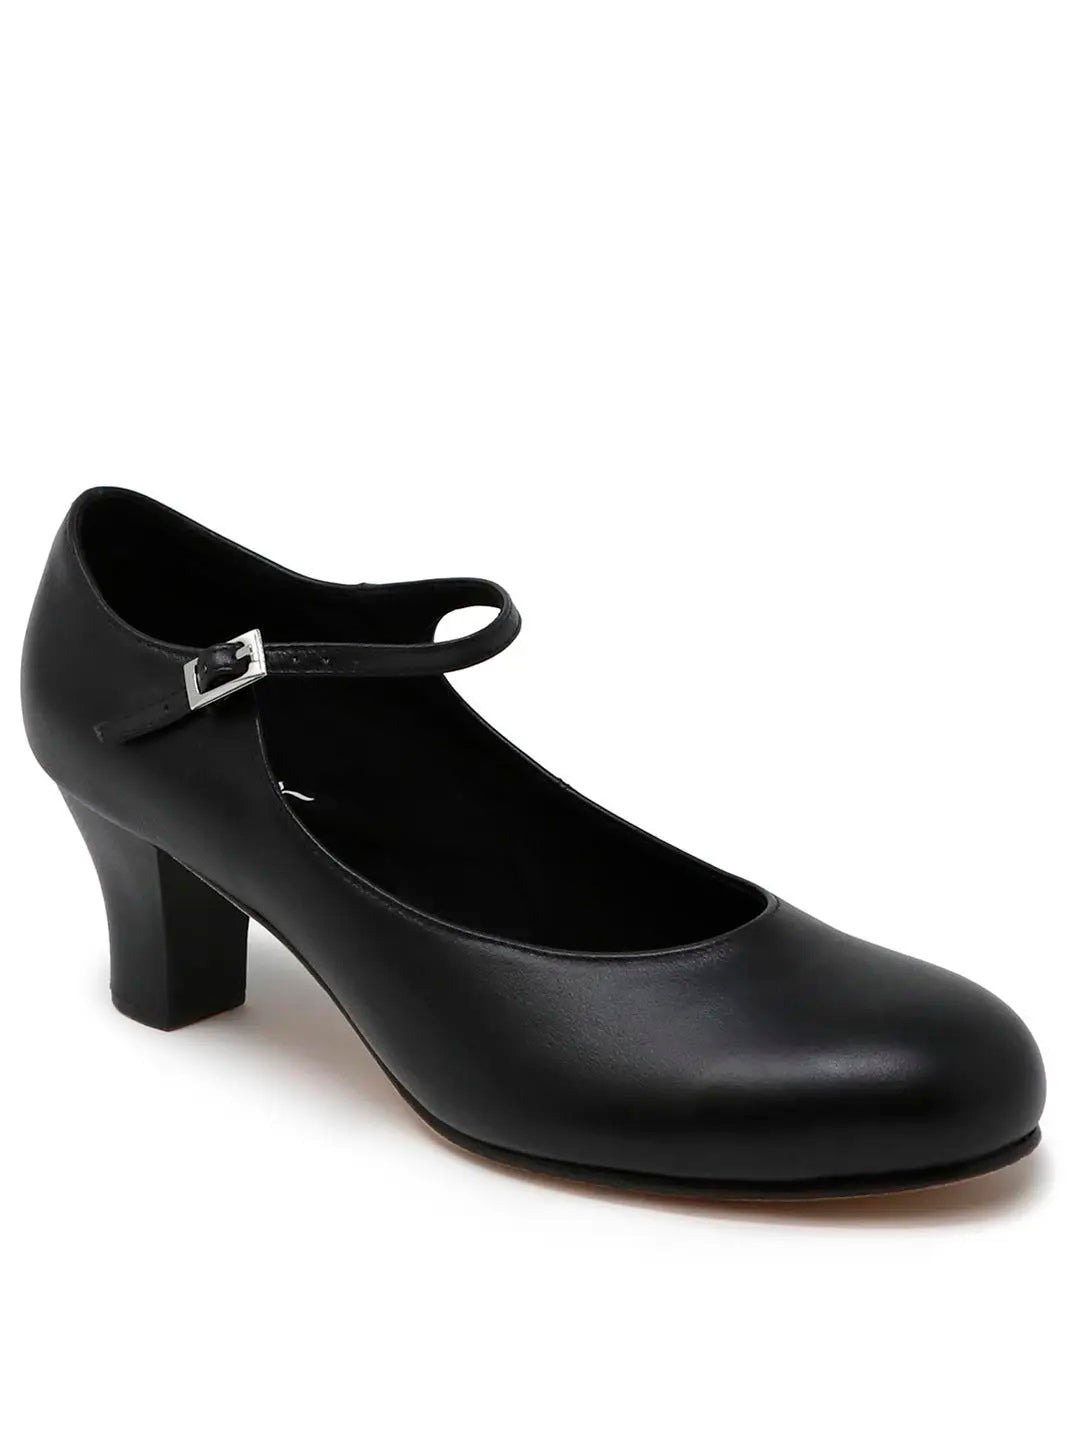 Cassie Character Shoe - Black